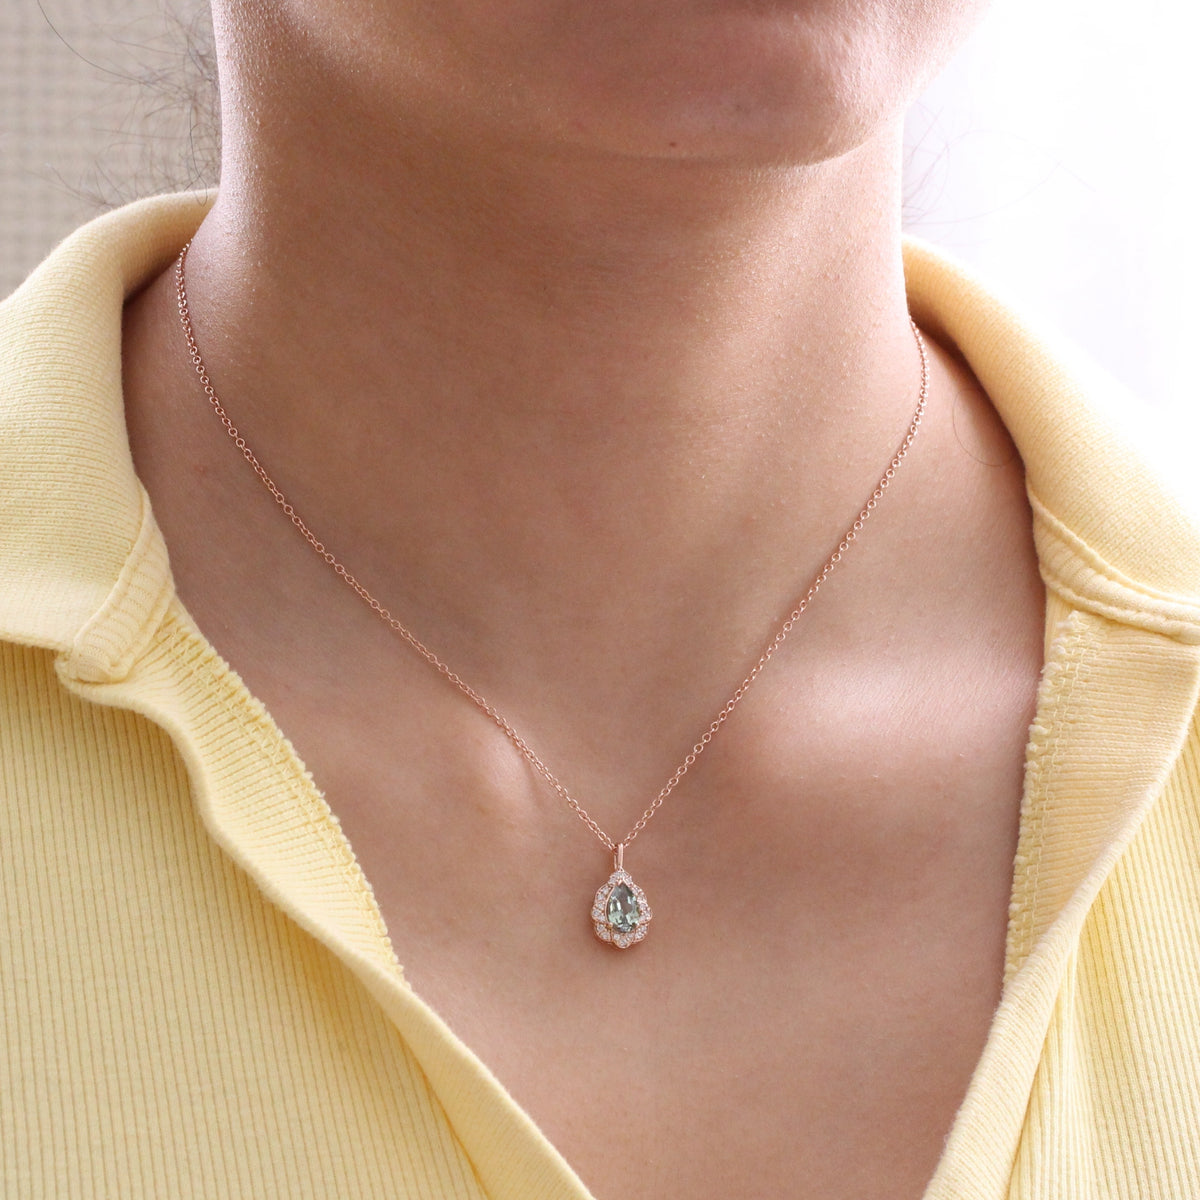 pear green sapphire necklace rose gold vintage style seafoam green sapphire diamond drop pendant necklace la more design jewelry